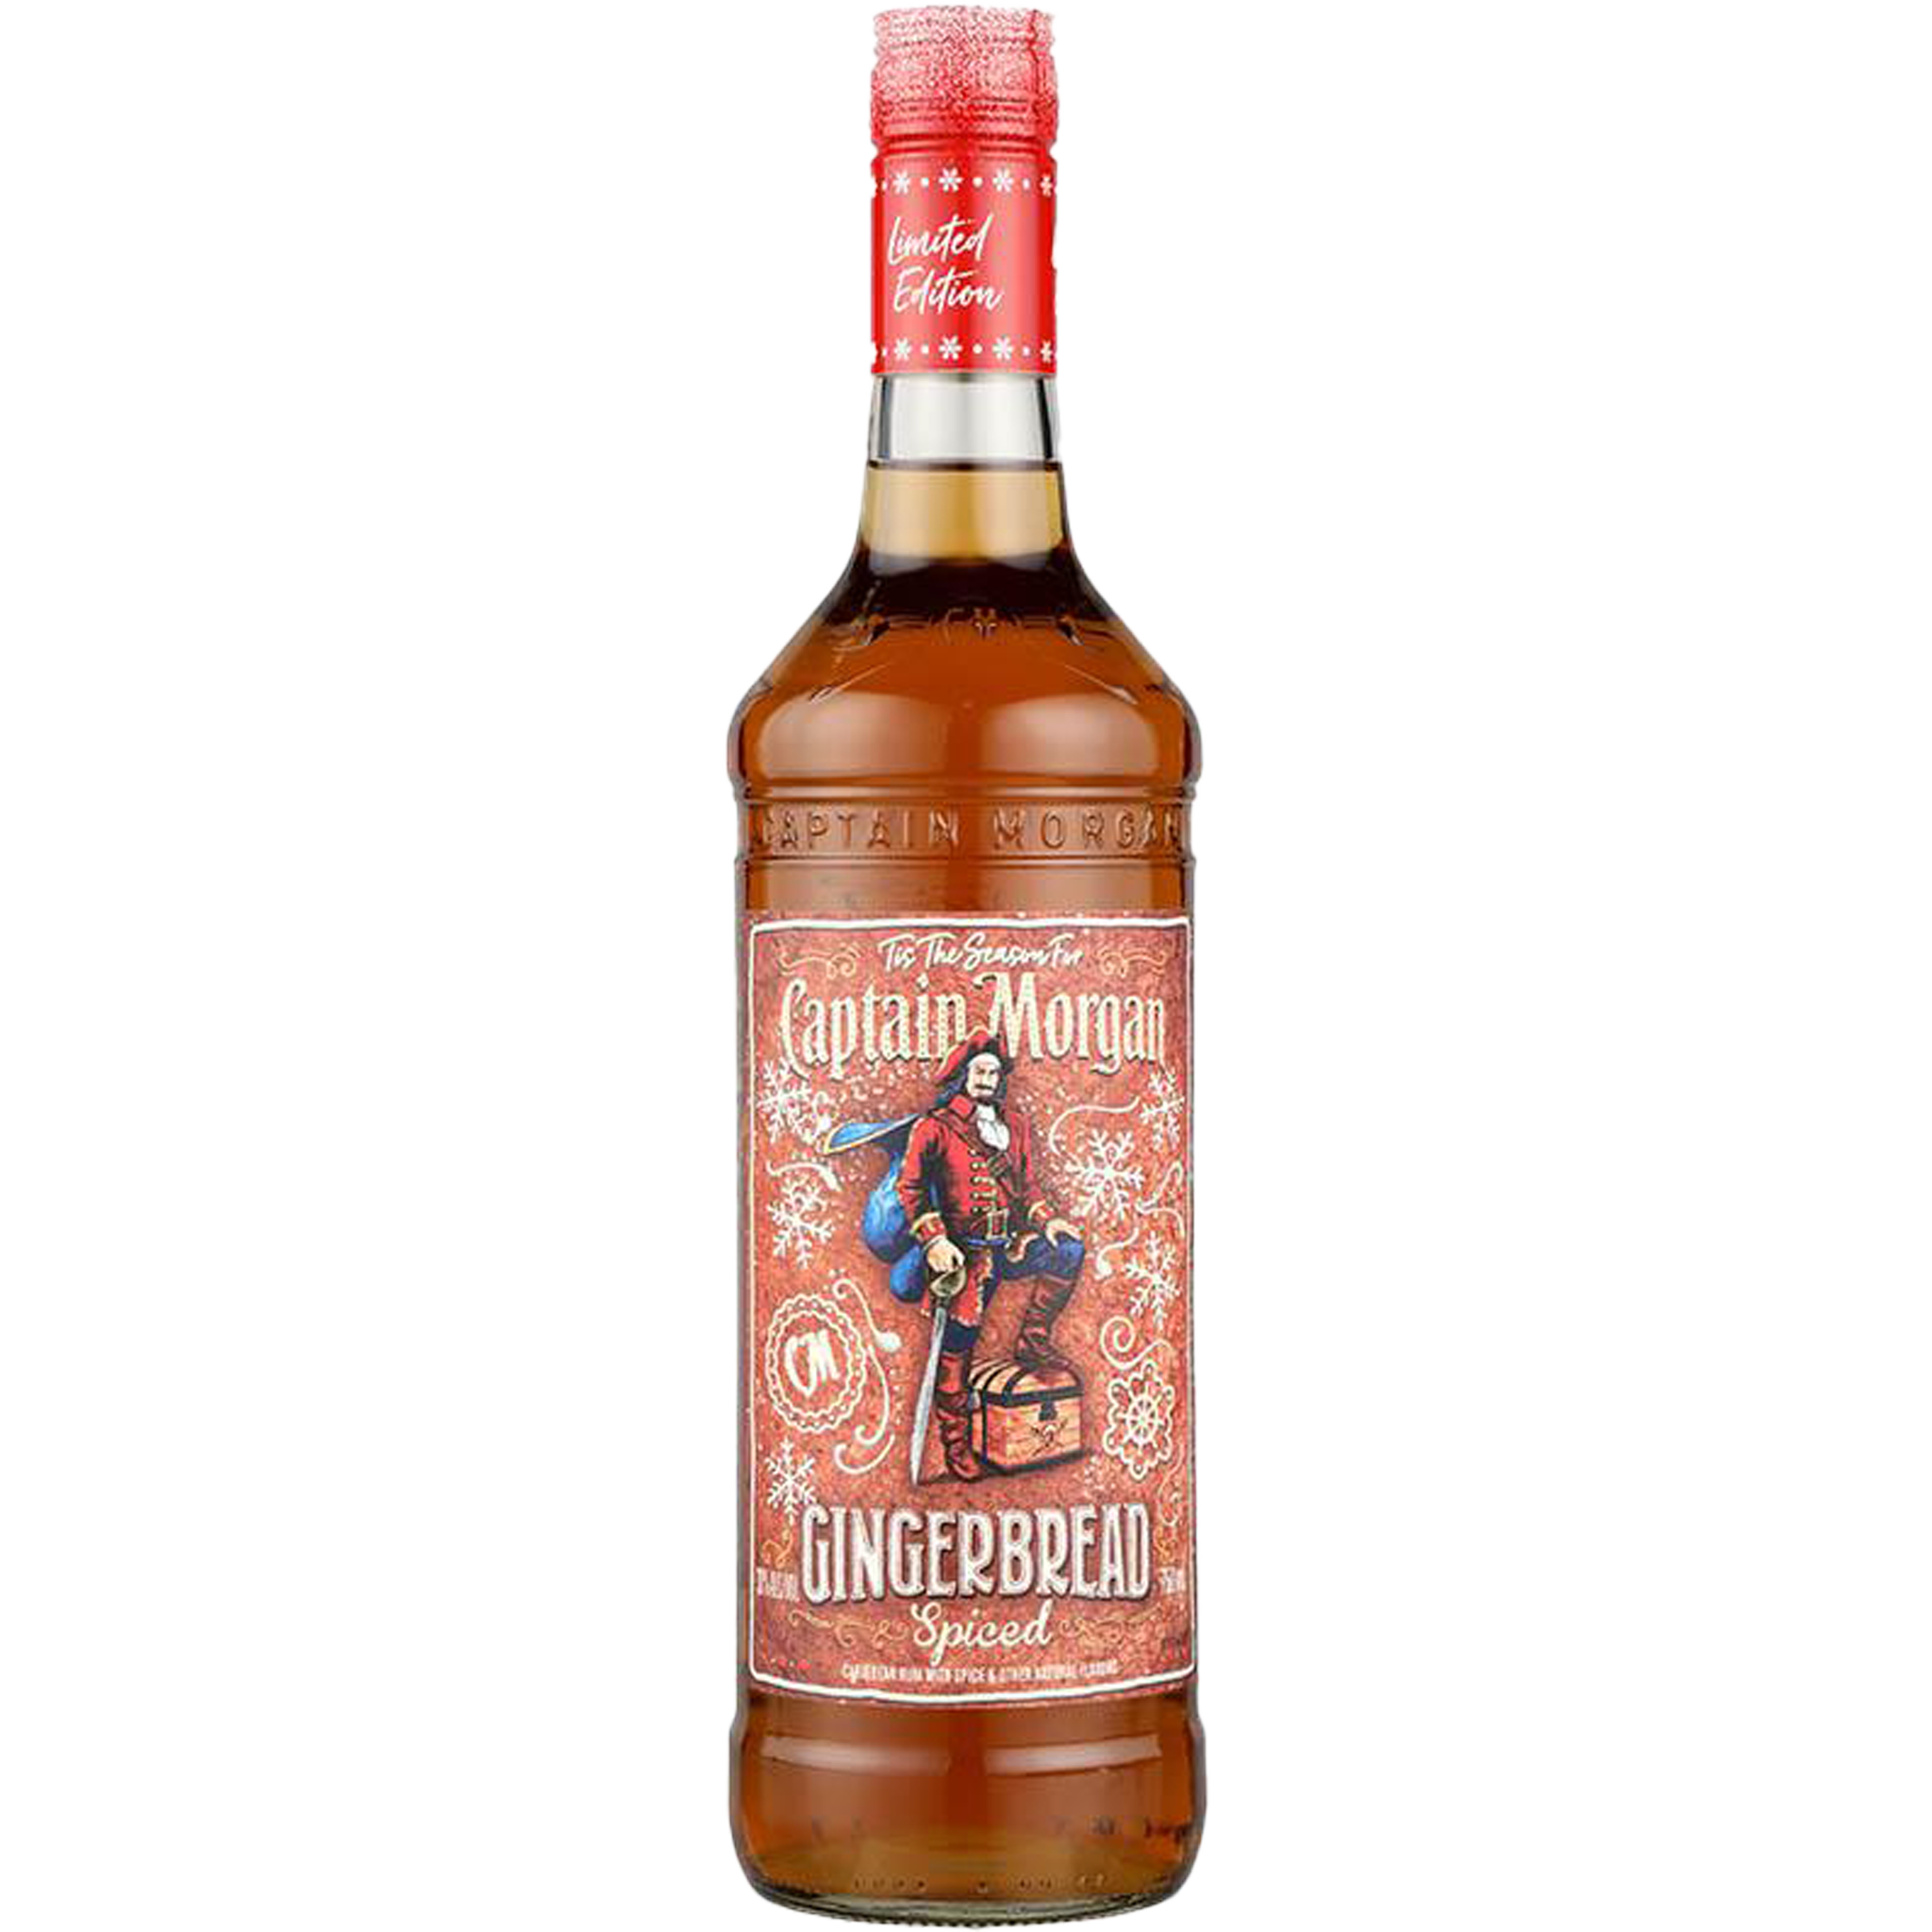 Captain Morgan Gingerbread Spiced Rum